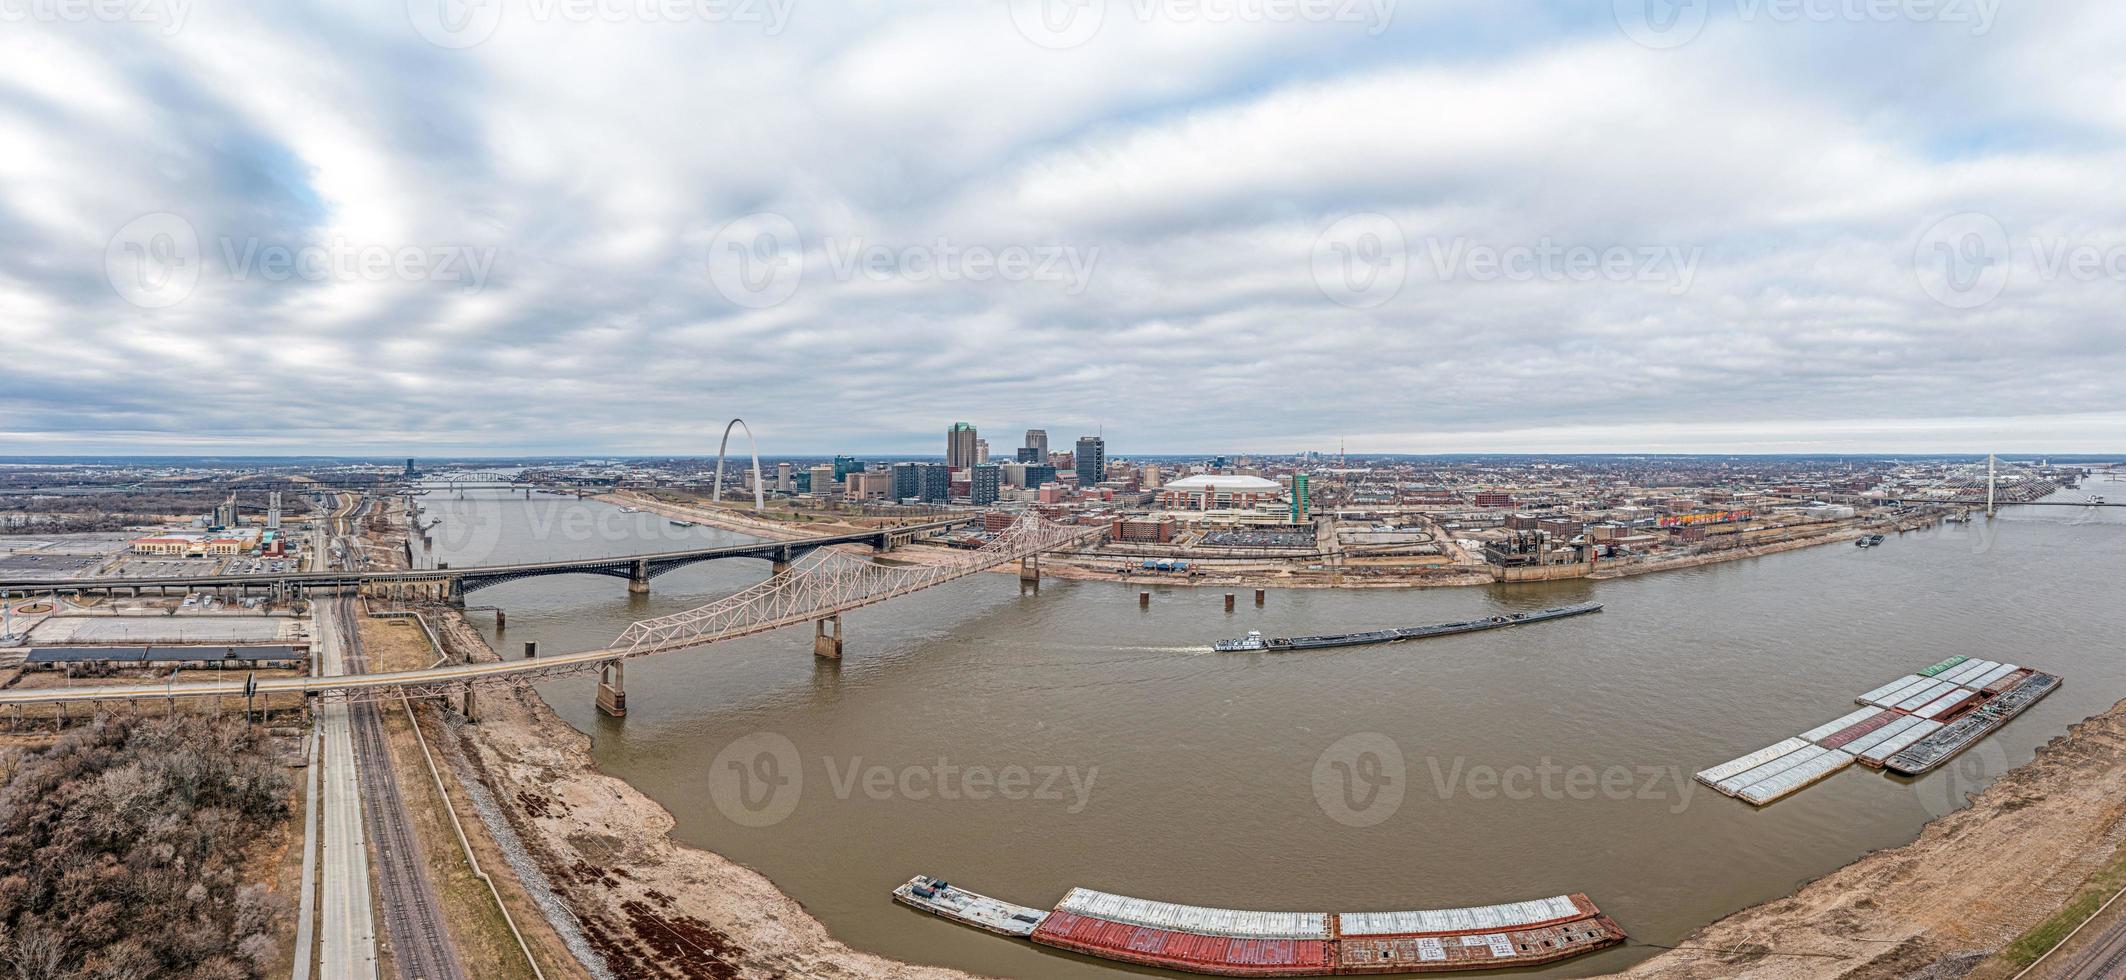 dar panorama over- st. louis horizon en Mississippi rivier- met poort boog gedurende dag foto